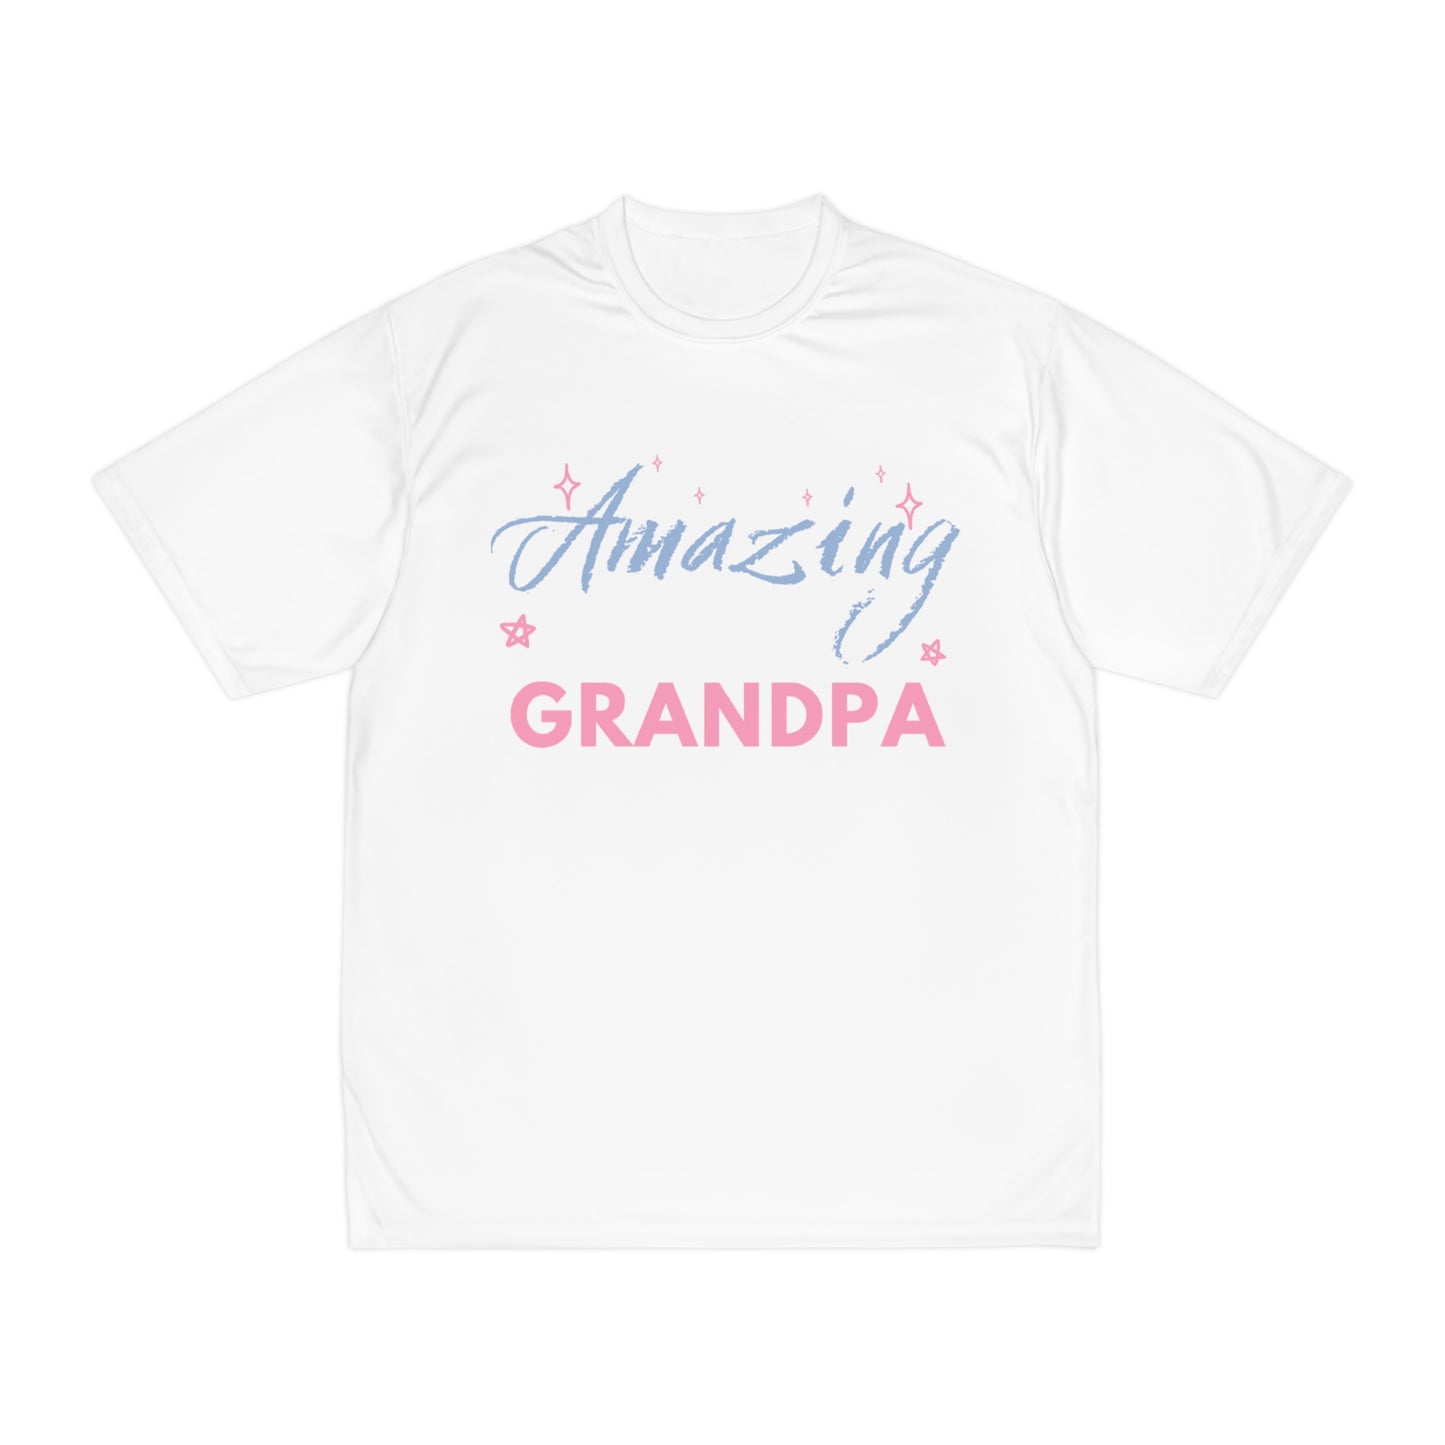 Amazing Grandpa Men's Performance T-Shirt